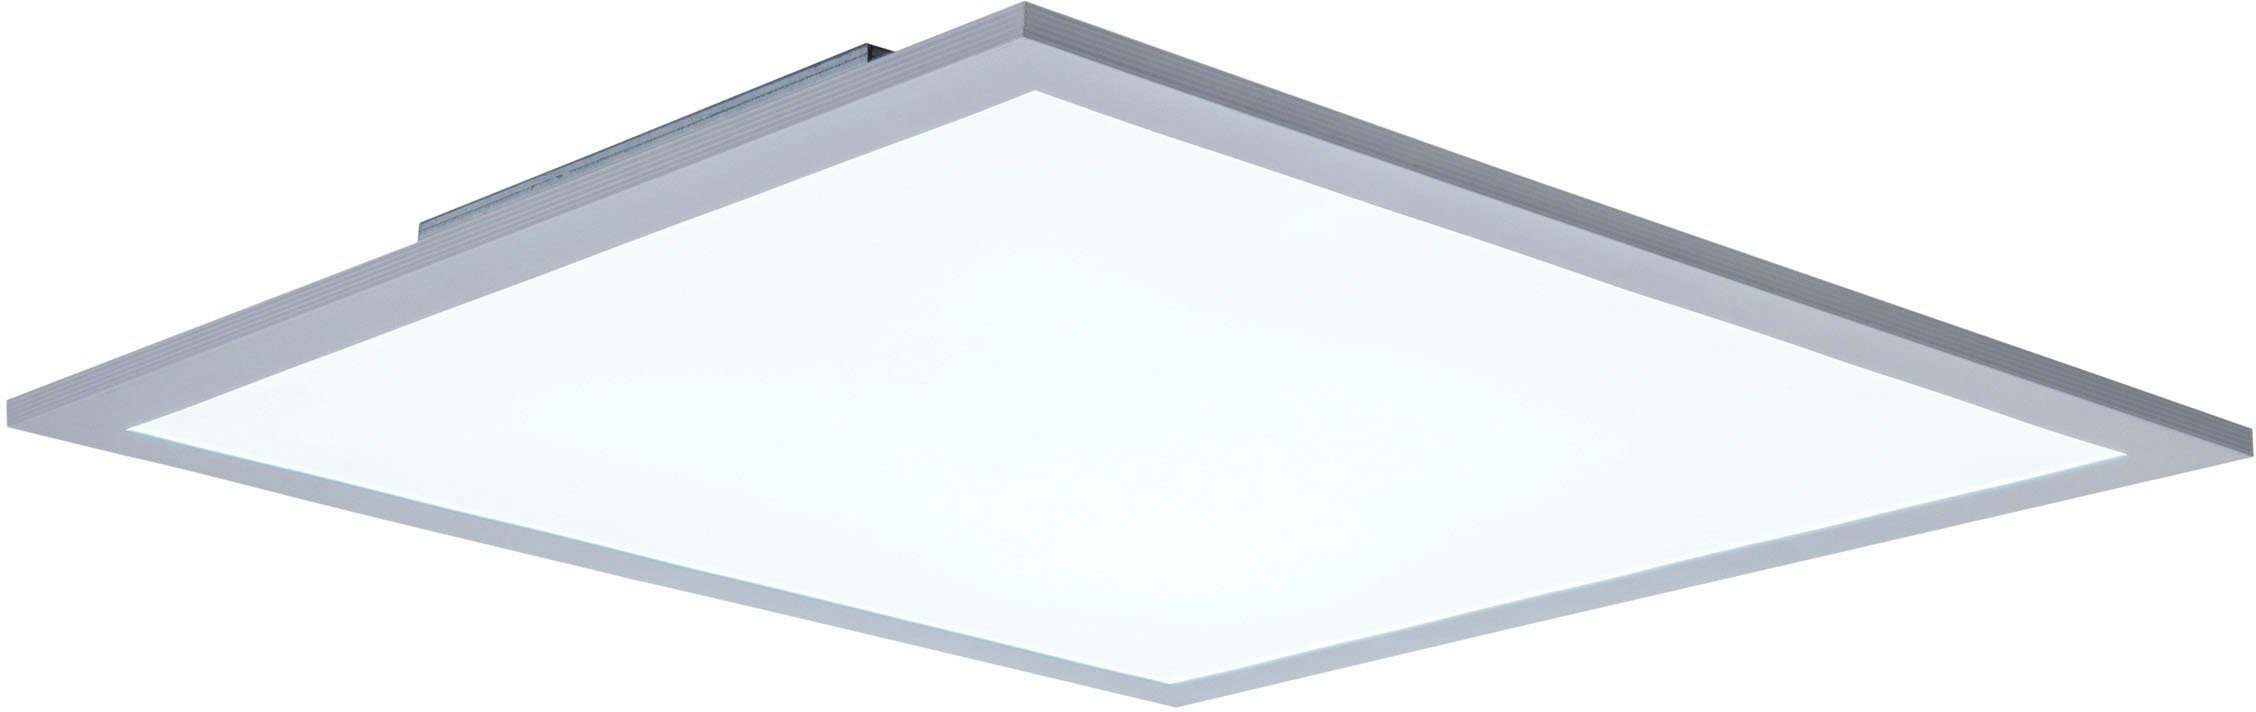 näve LED Panel Nicola, LED Neutralweiß, H: Lichtfarbe LED, 45x45cm, 6cm, integriert, Aufbaupanel 120 neutralweiß weiß fest